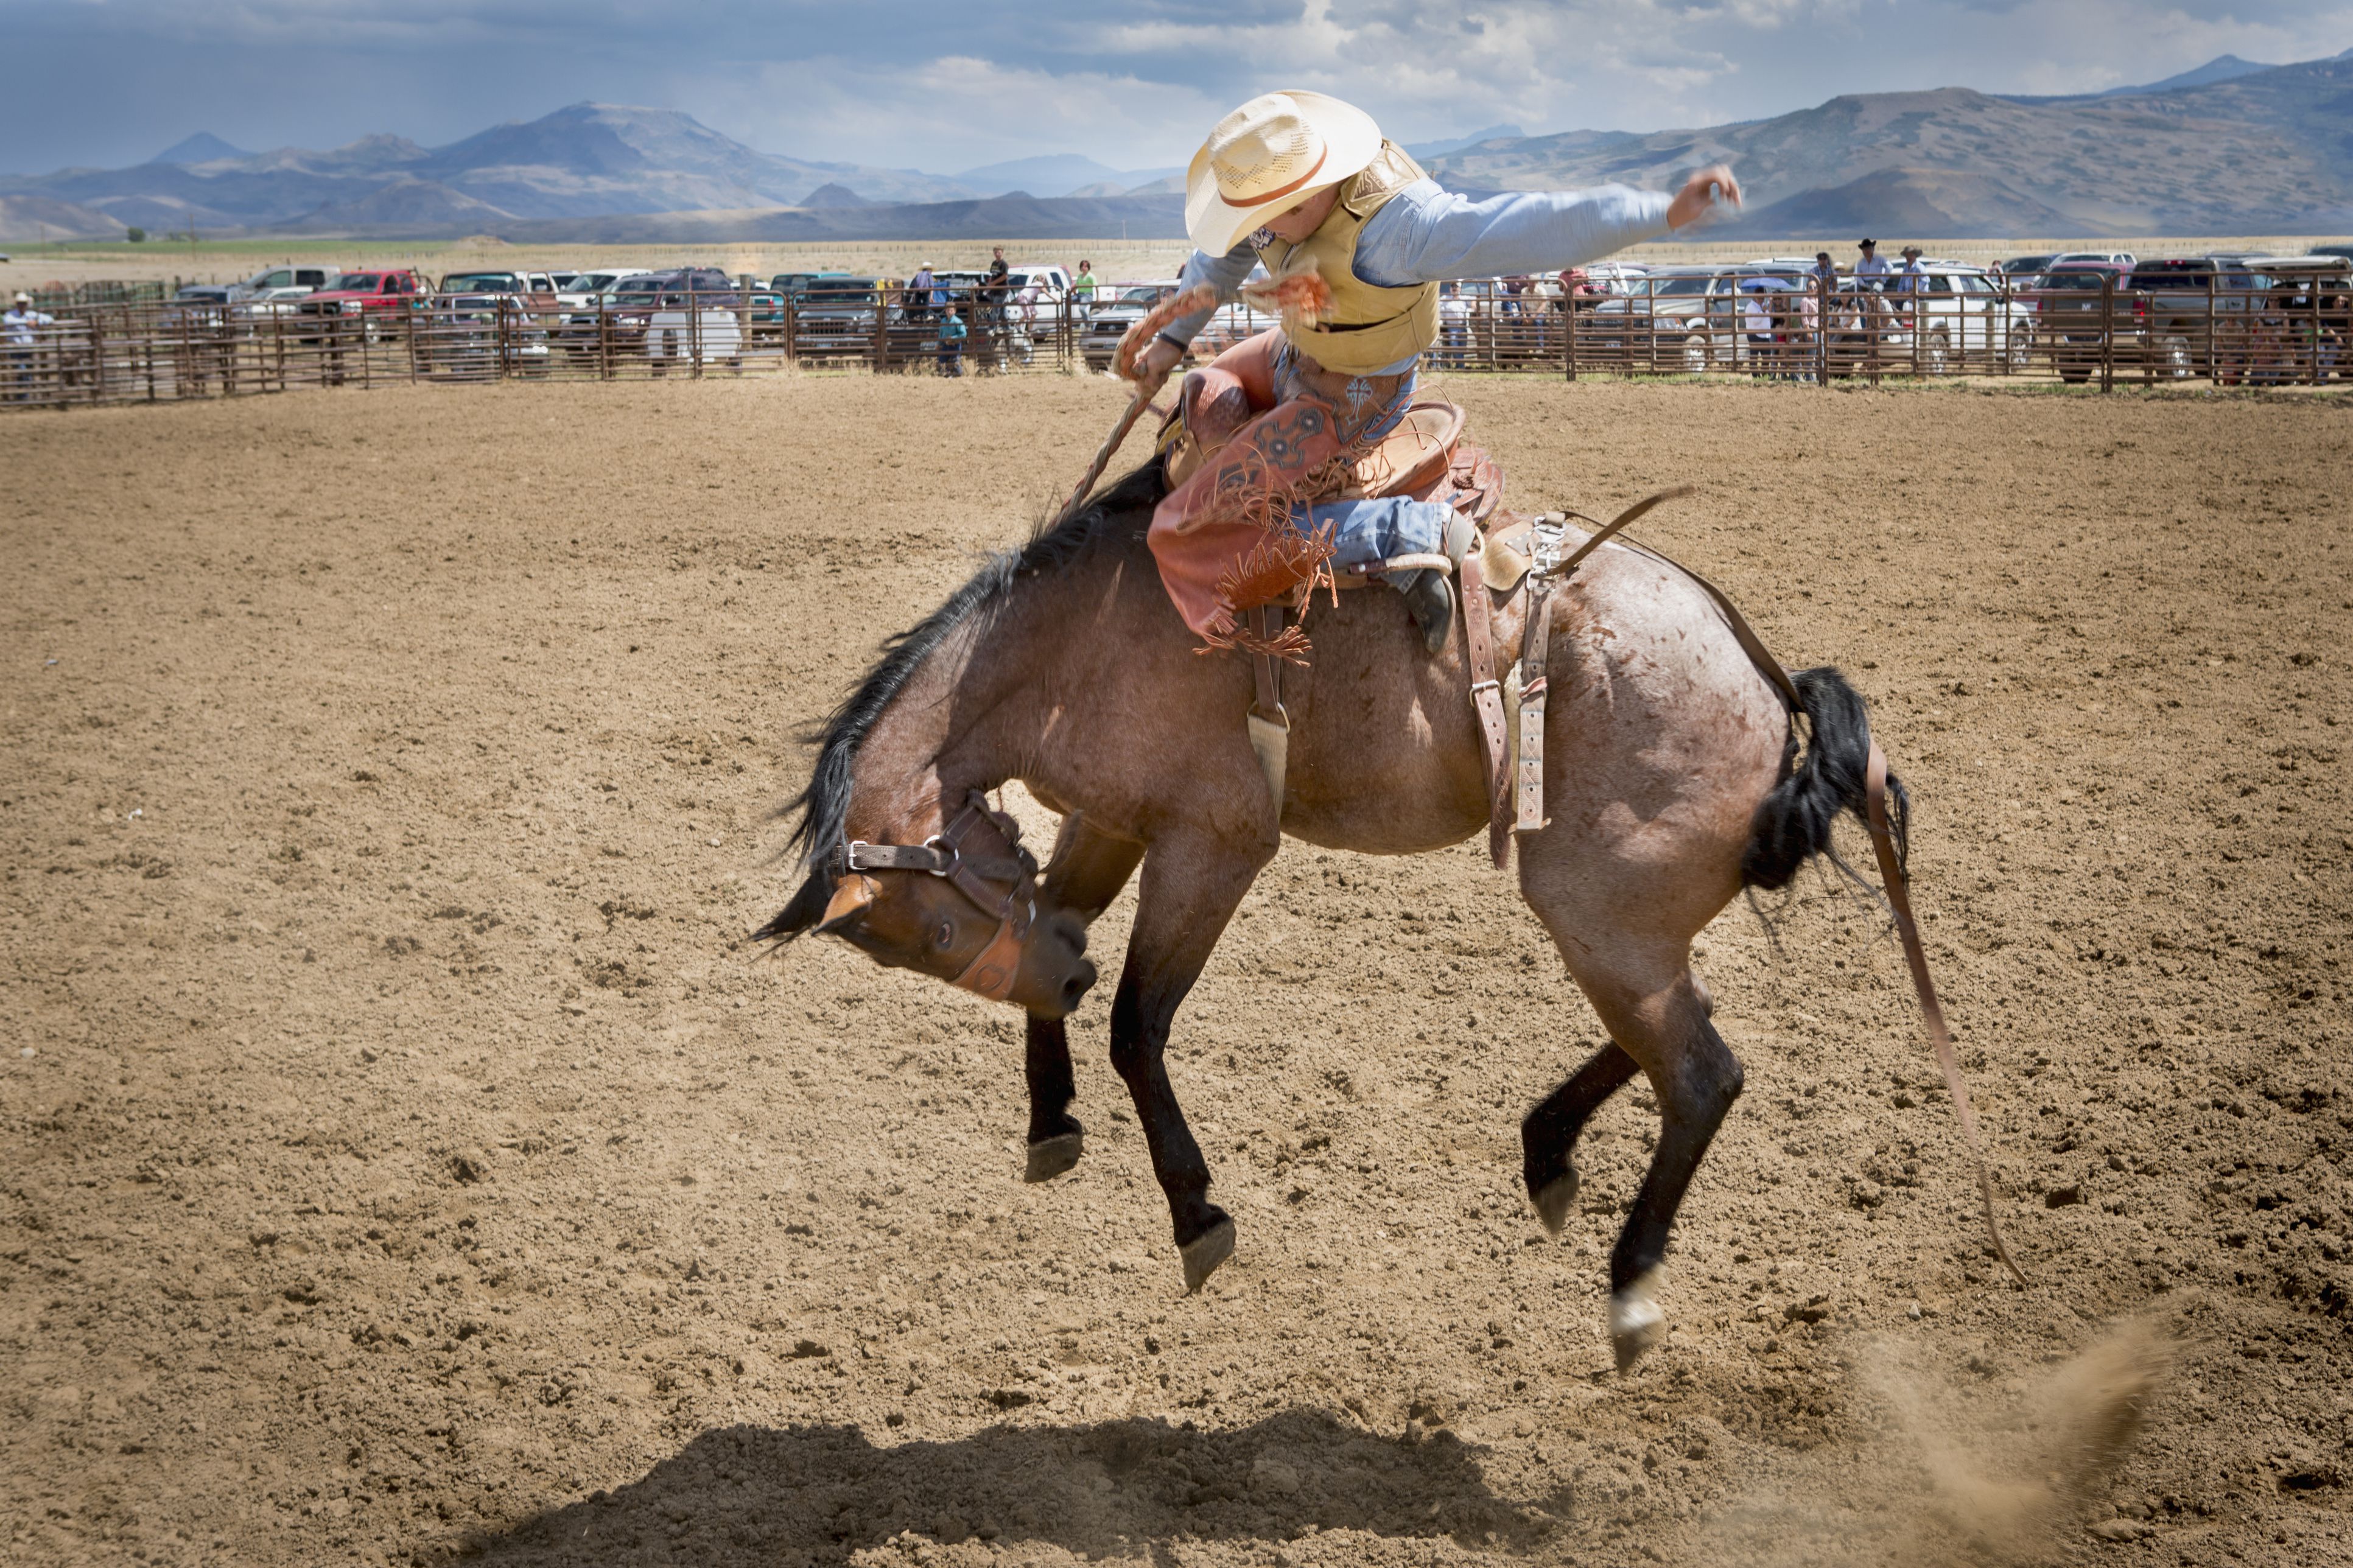 A cowboy rides a bucking horse